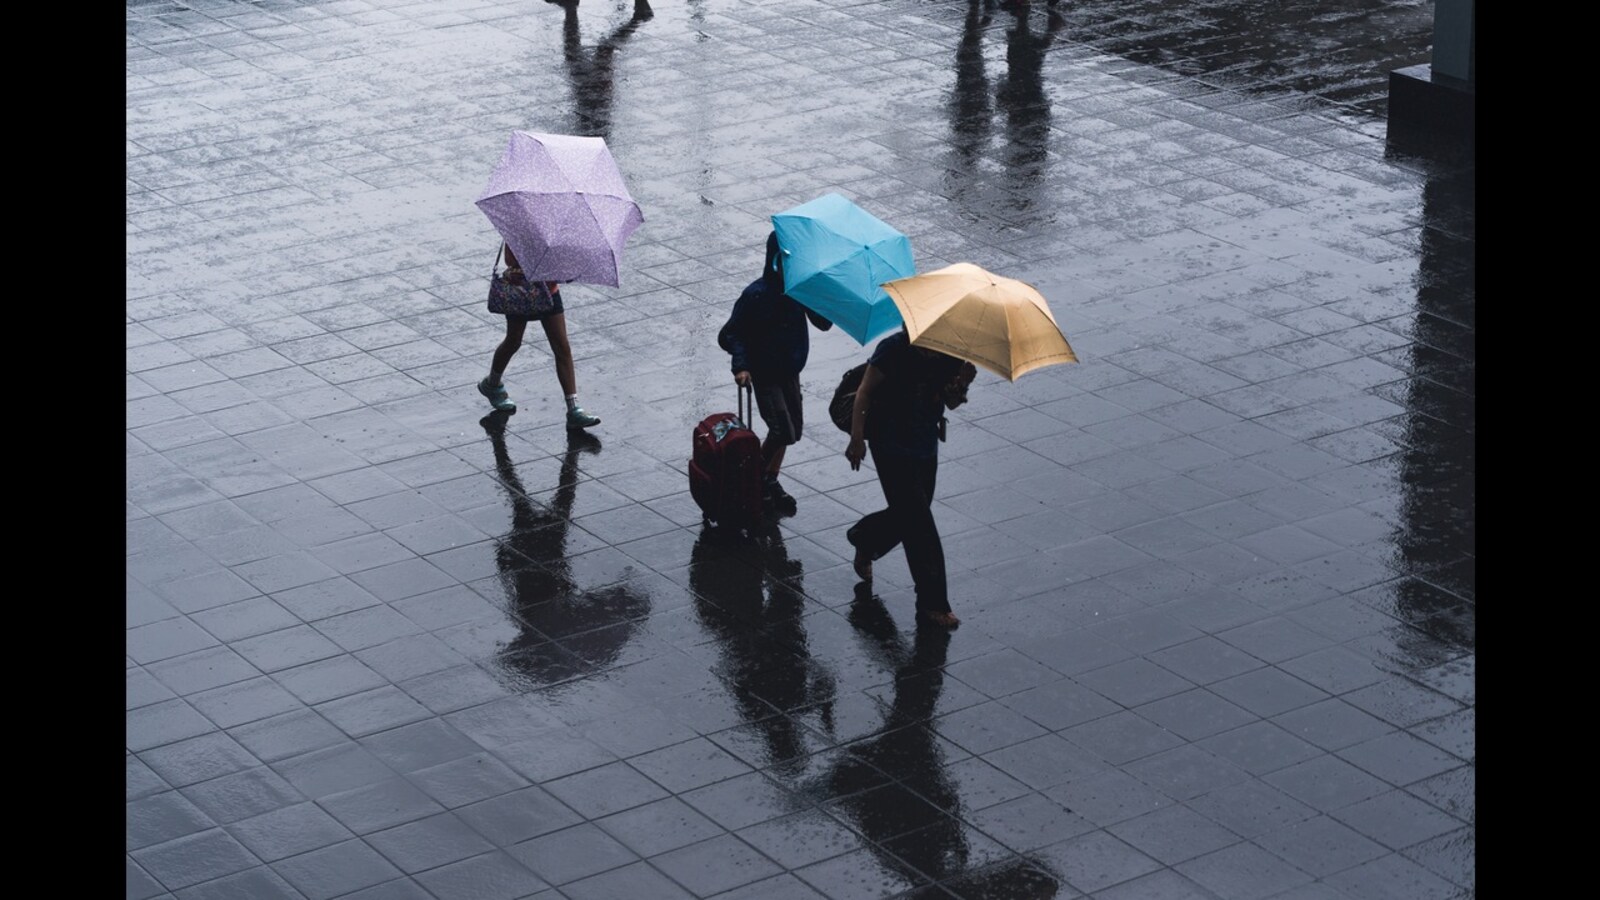 Louis Vuitton Umbrella when I walk through the rain